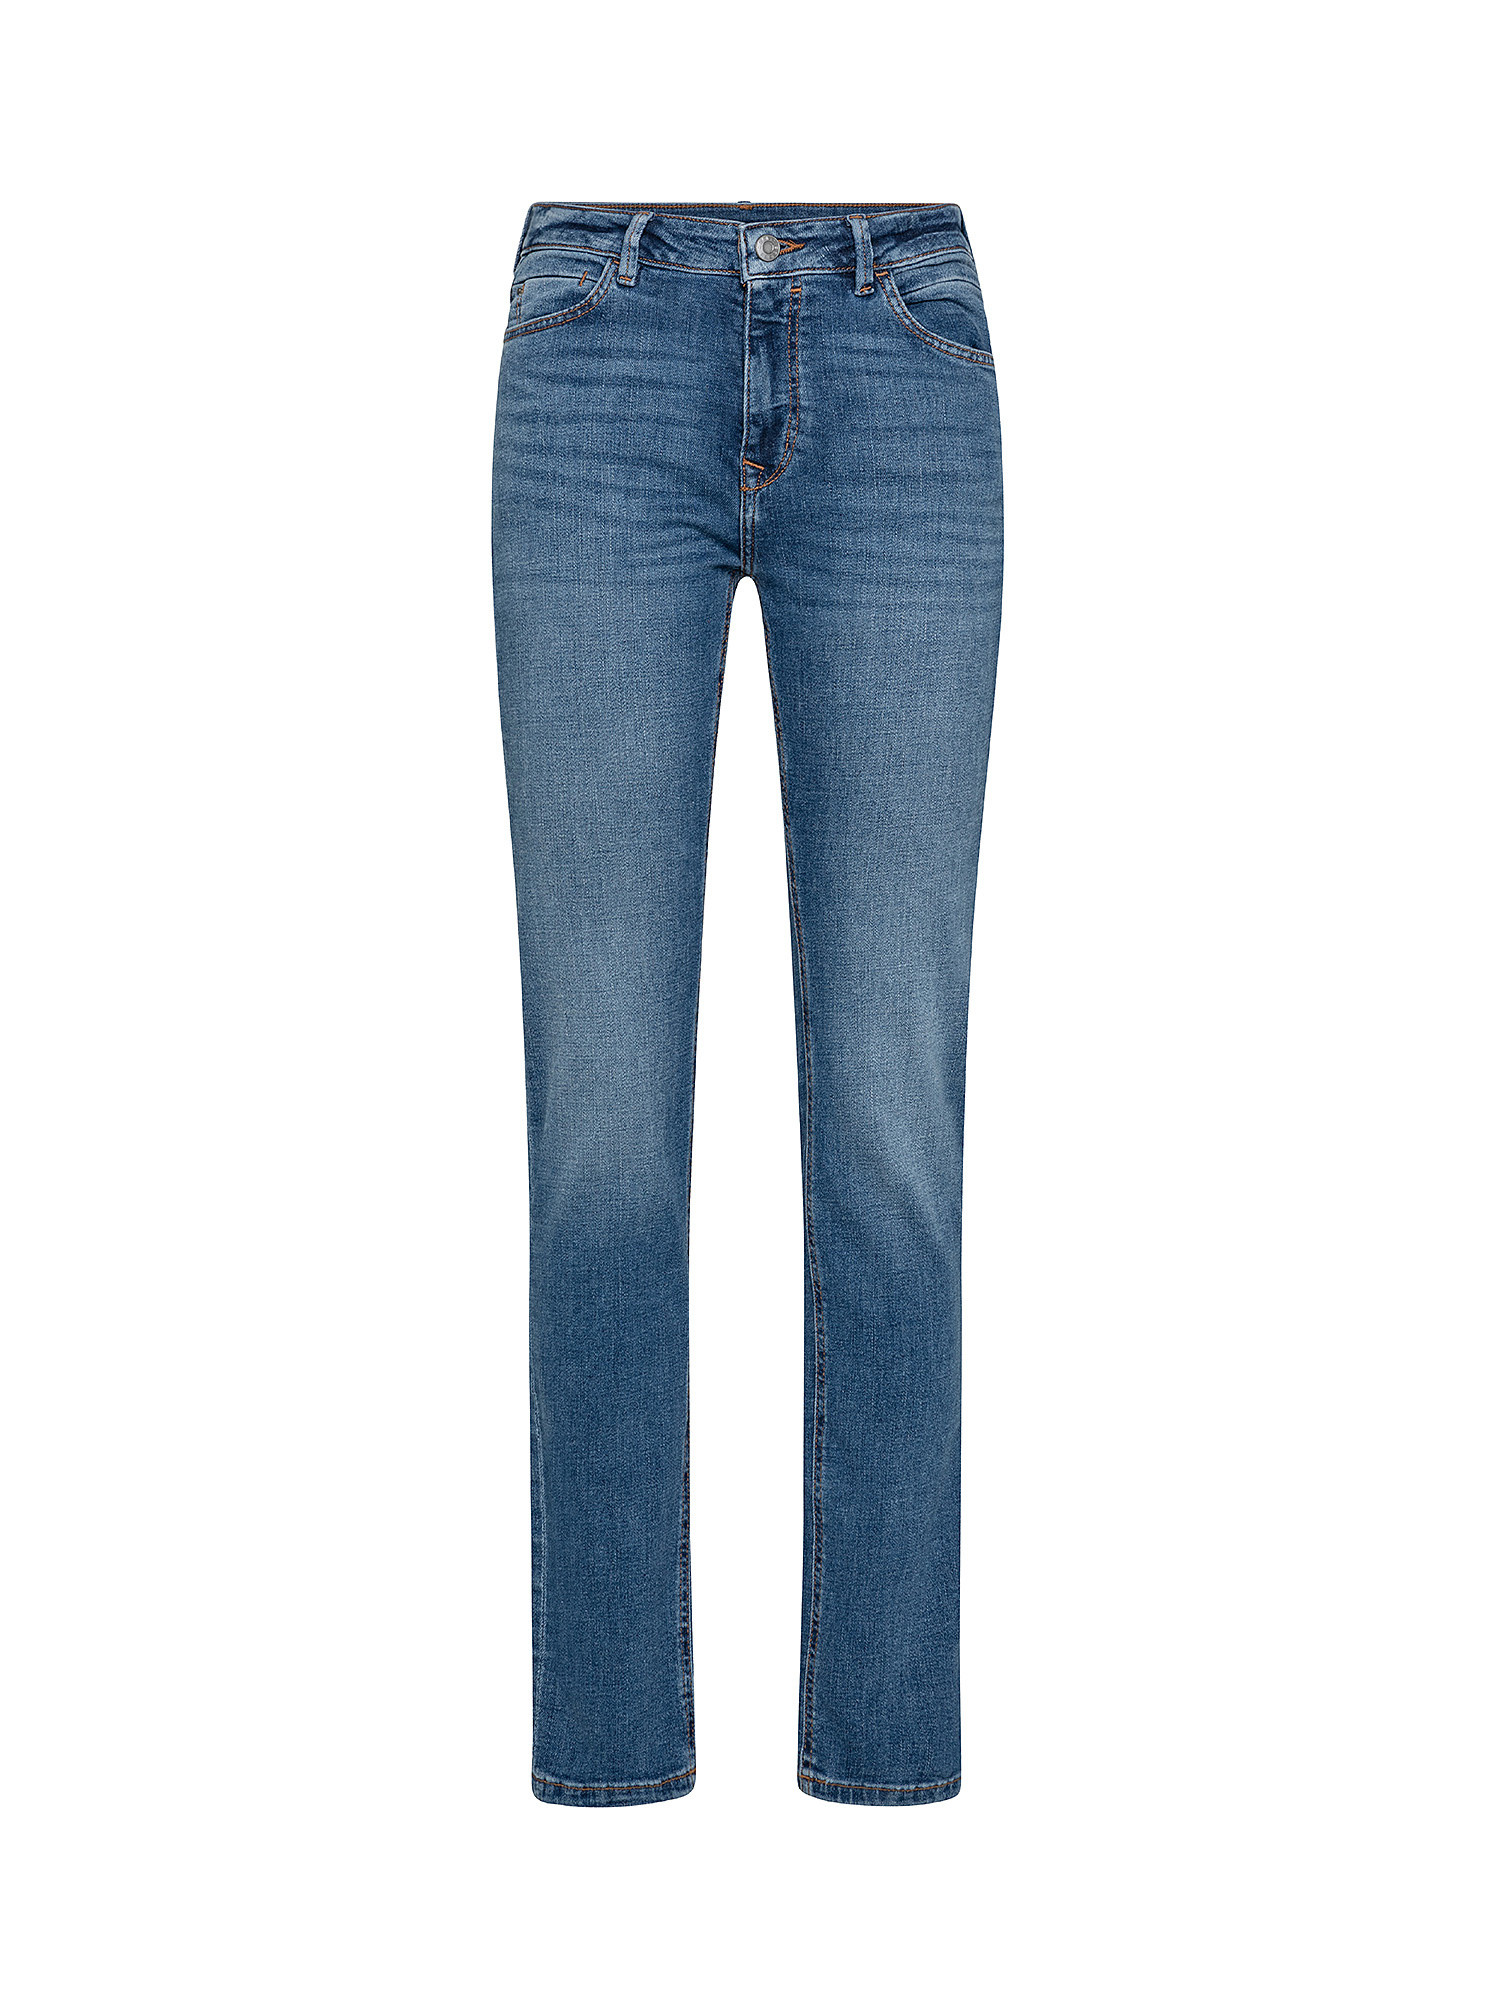 Jeans elasticizzati in cotone biologico, Blu, large image number 0